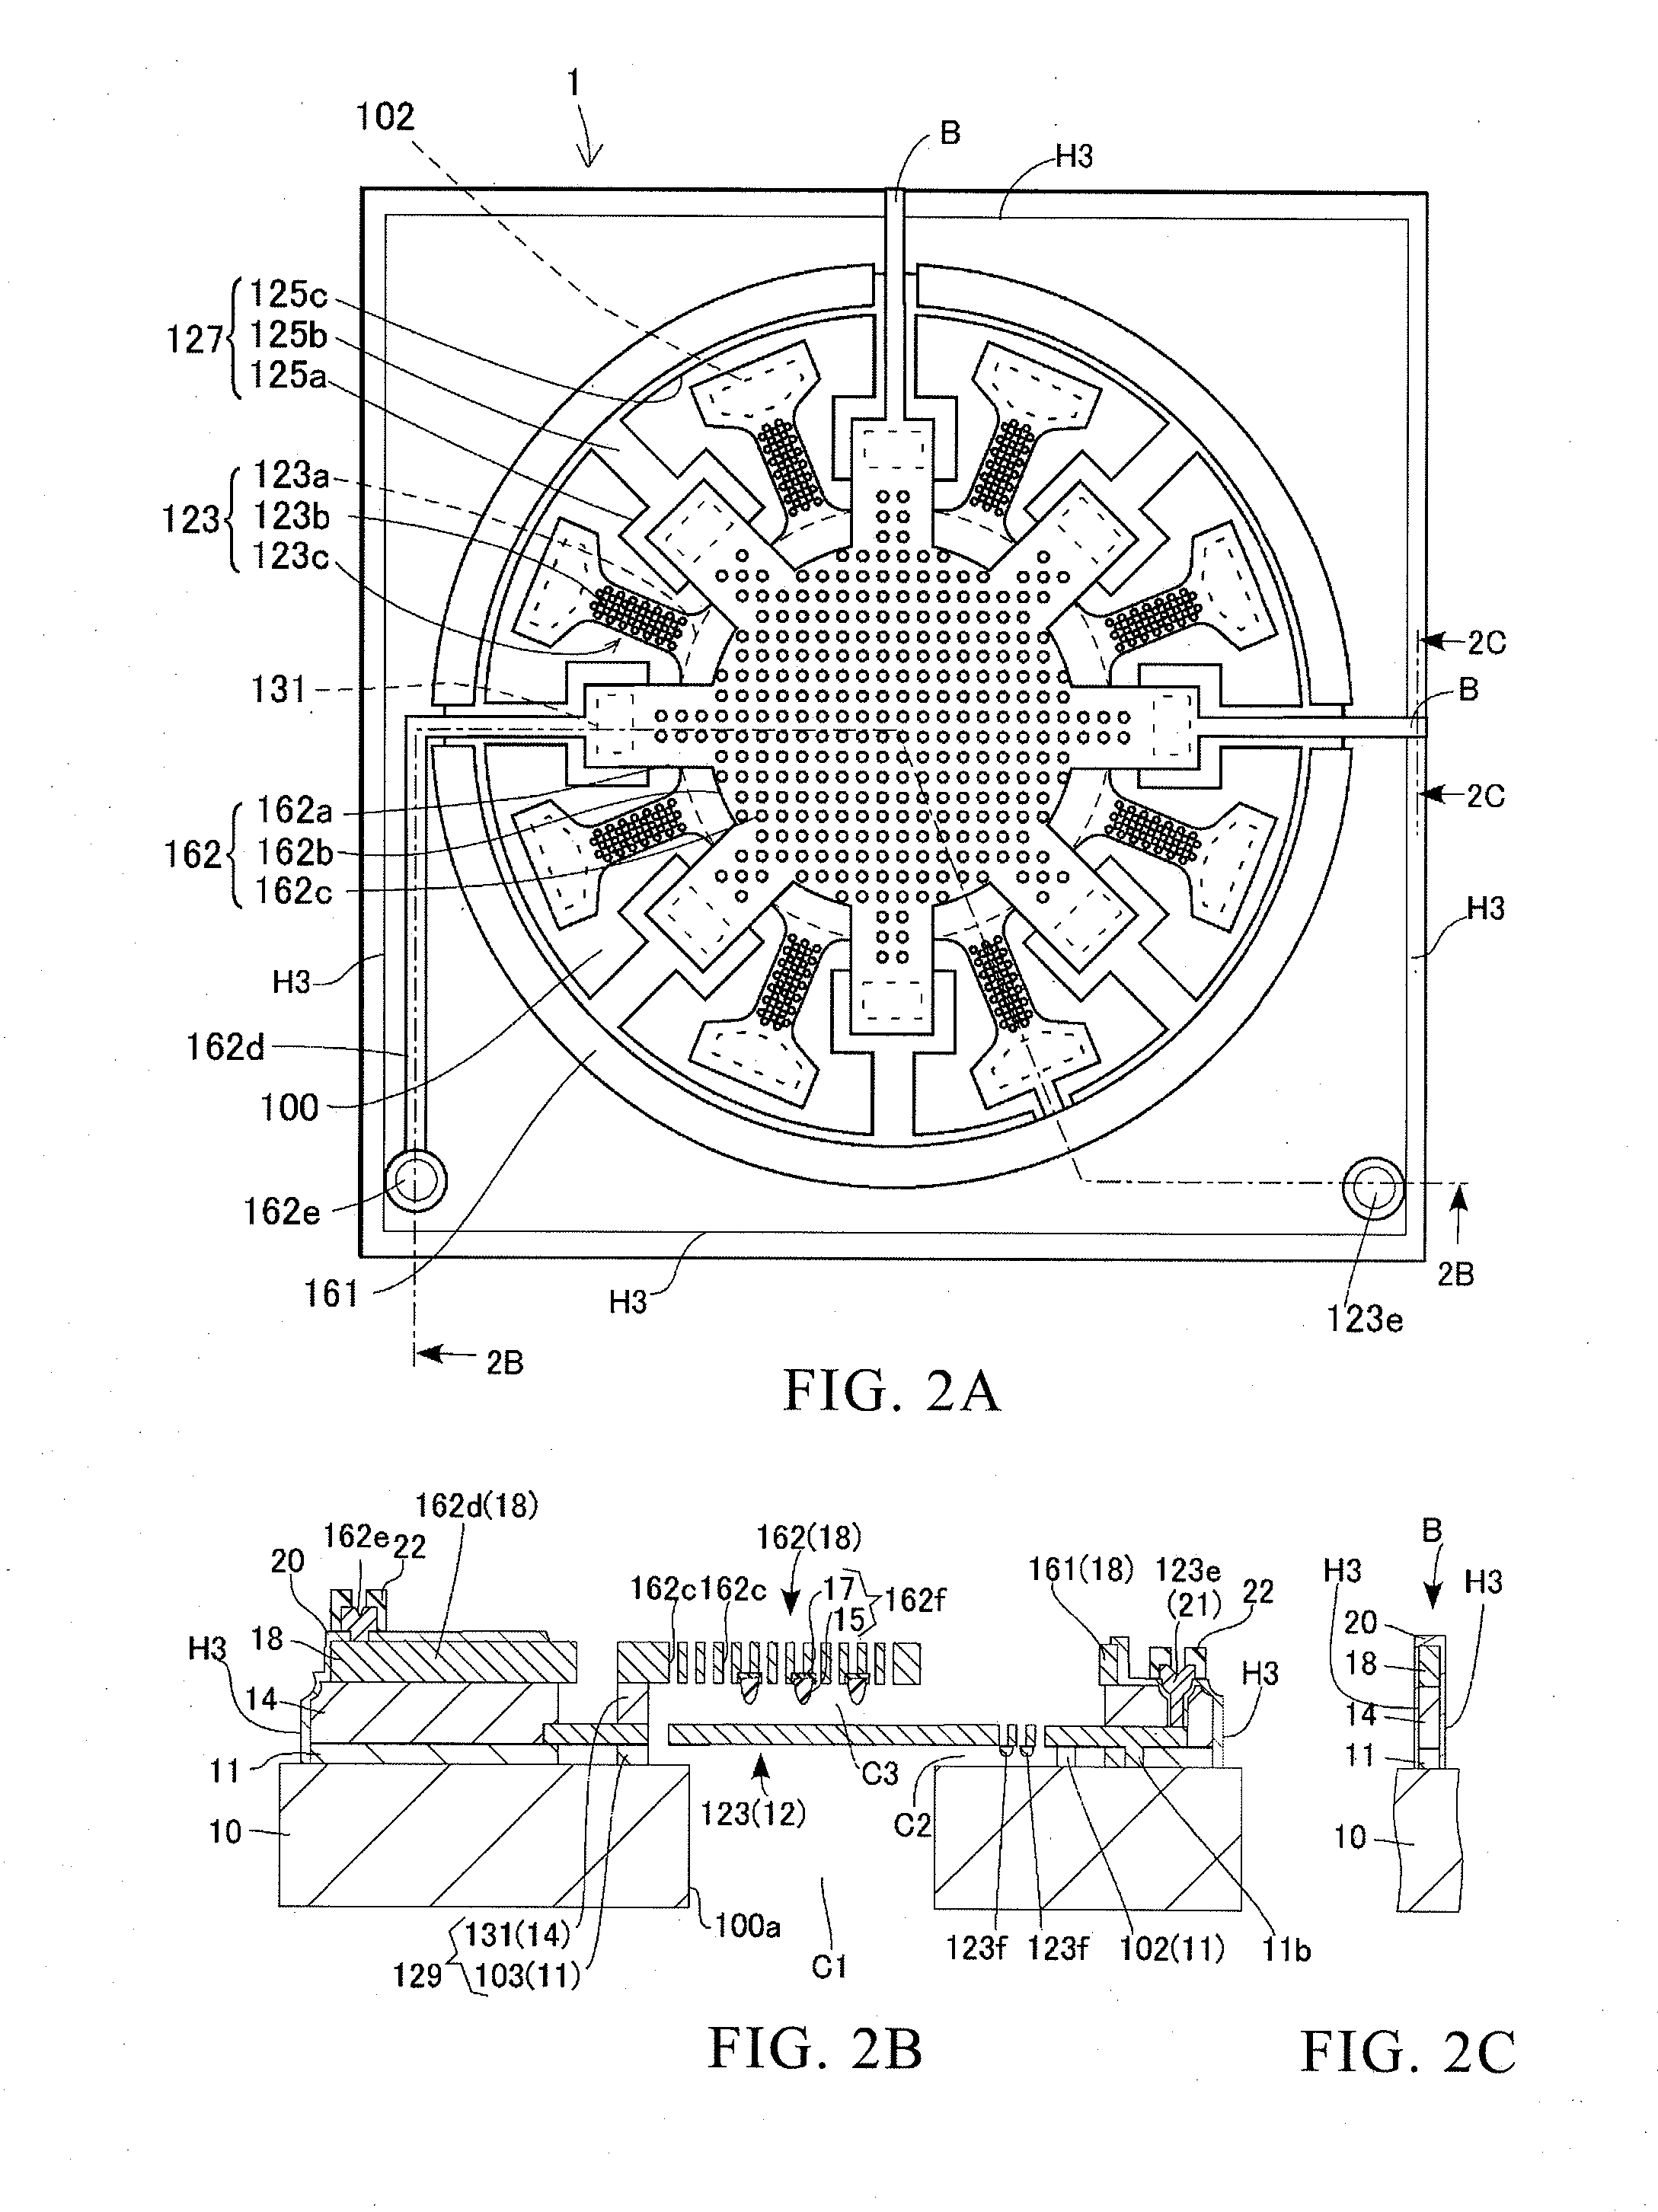 Condenser microphone array chip